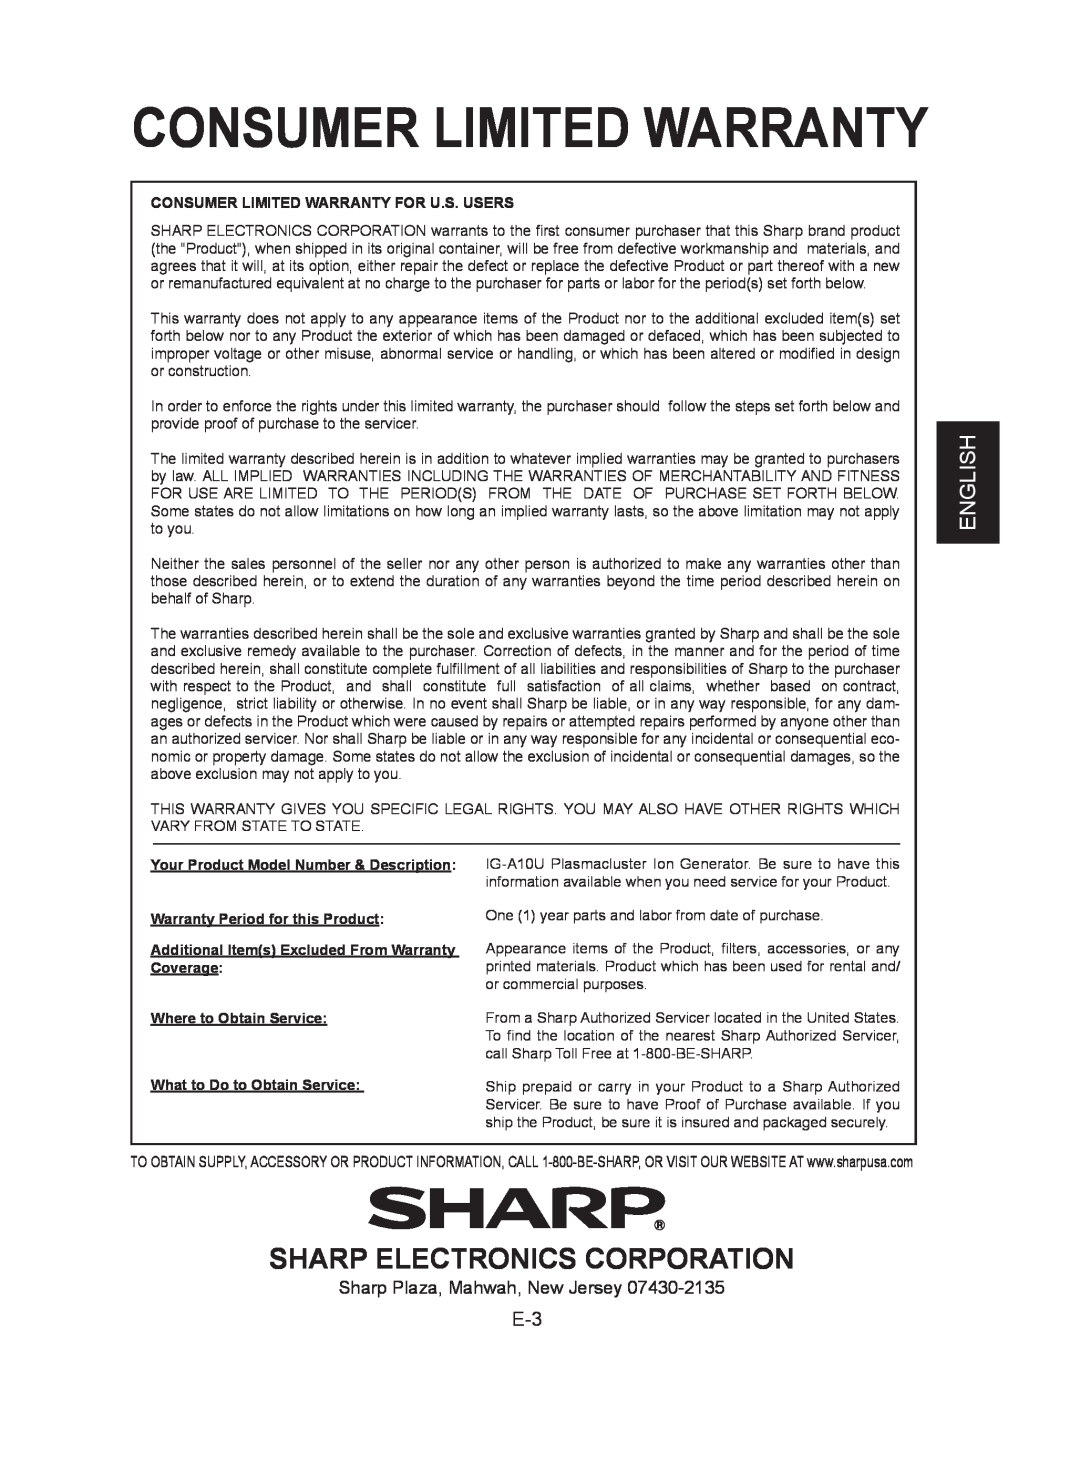 Sharp IG-A10U operation manual Sharp Electronics Corporation, Consumer Limited Warranty, Español Français English 